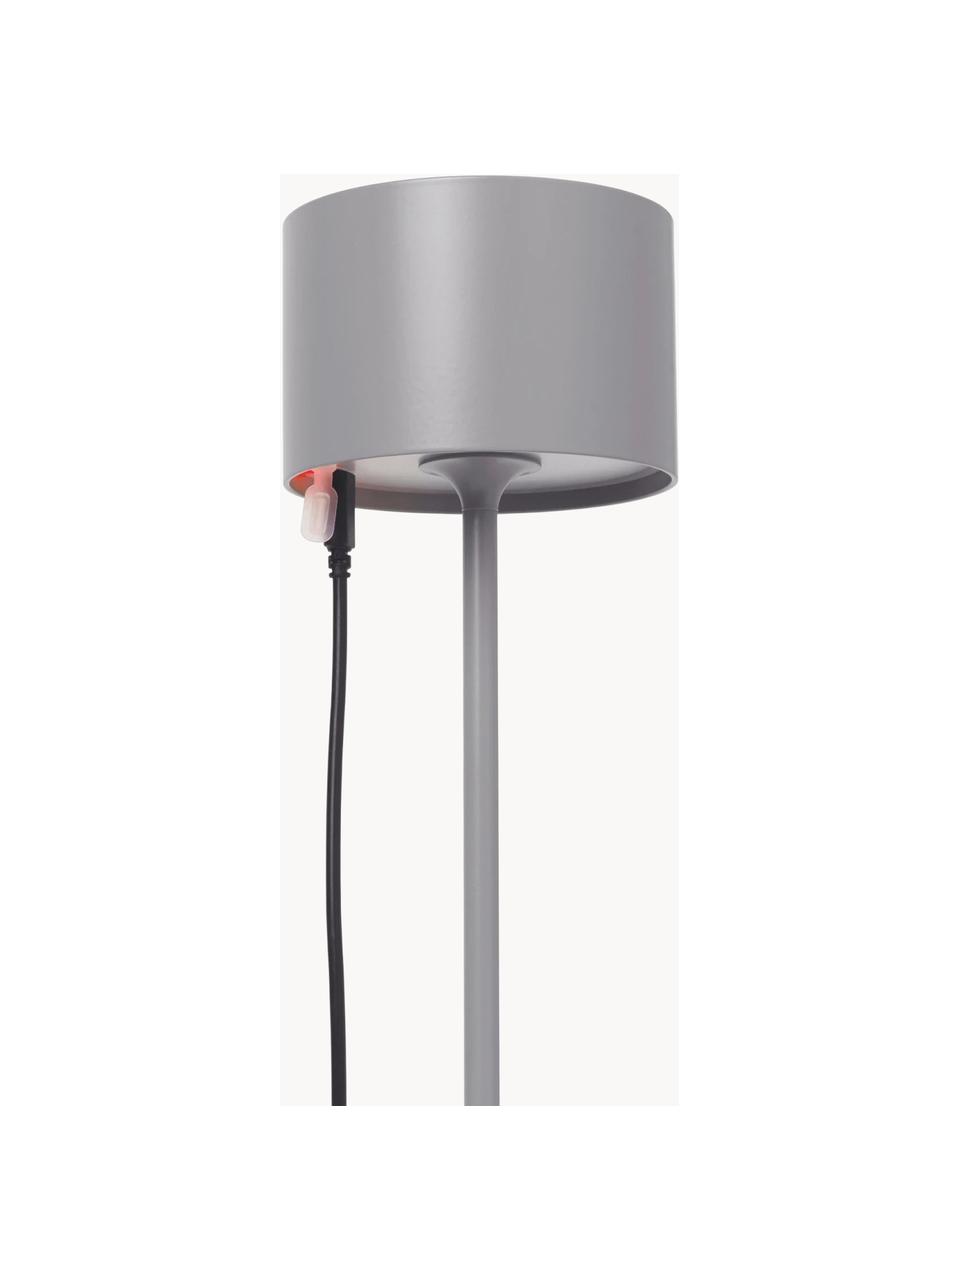 Mobile LED-Outdoor-Tischlampe Farol, dimmbar, Grau, Ø 11 x H 34 cm